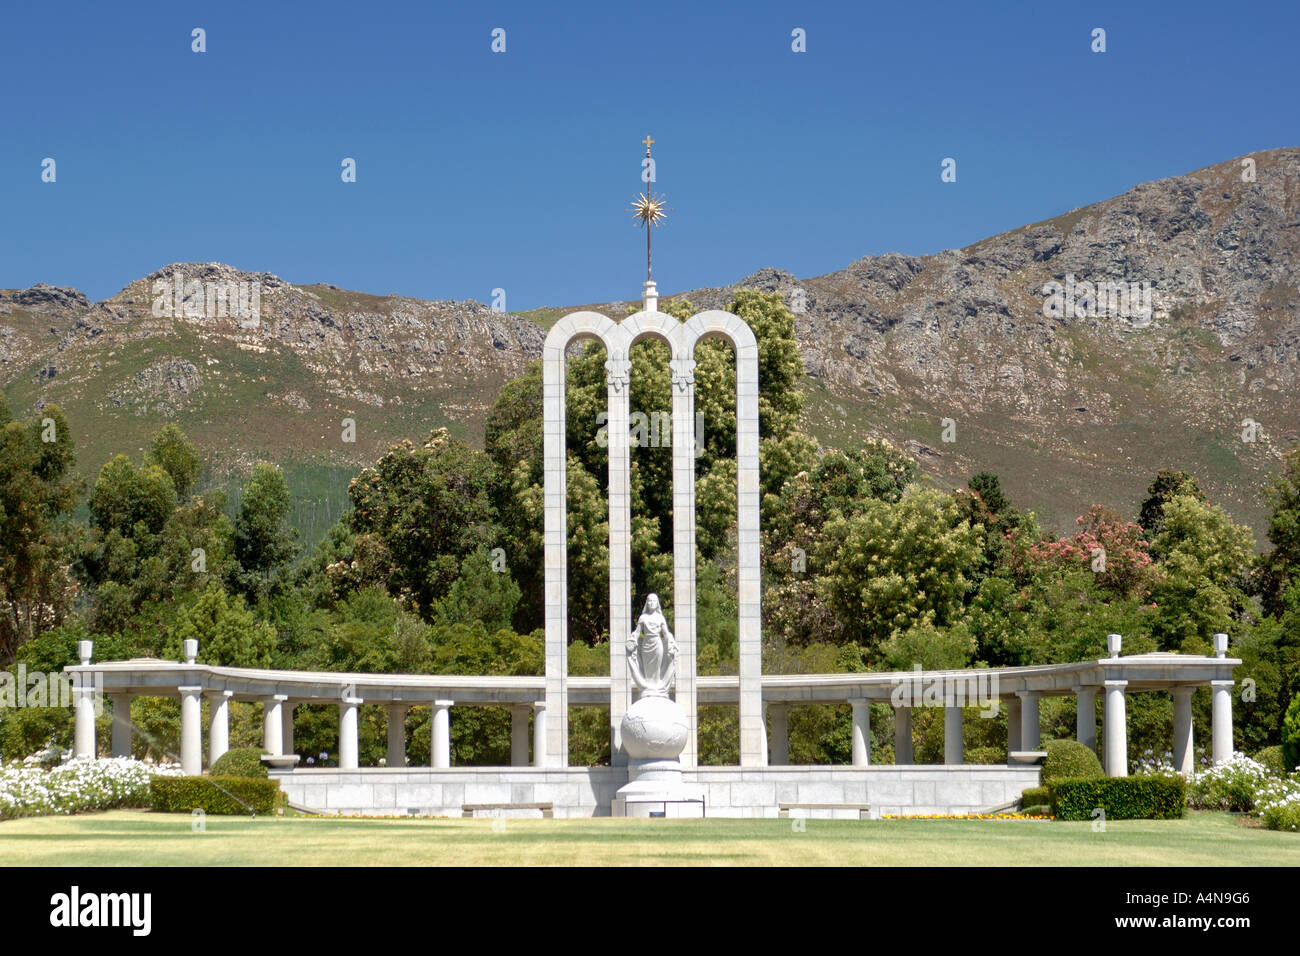 Das Hugenotten-Denkmal in Franschhoek in der Provinz Westkap in Südafrika. Stockfoto